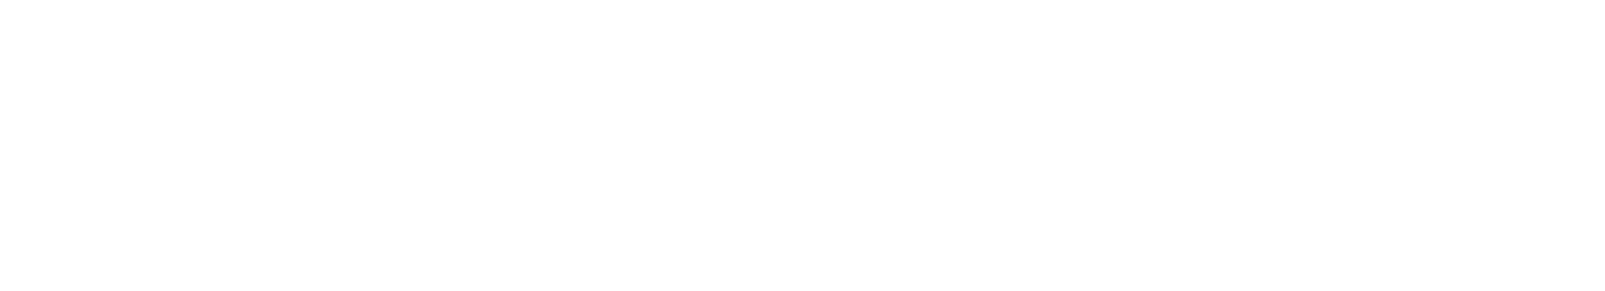 Xponential Fitness Logo groß für dunkle Hintergründe (transparentes PNG)